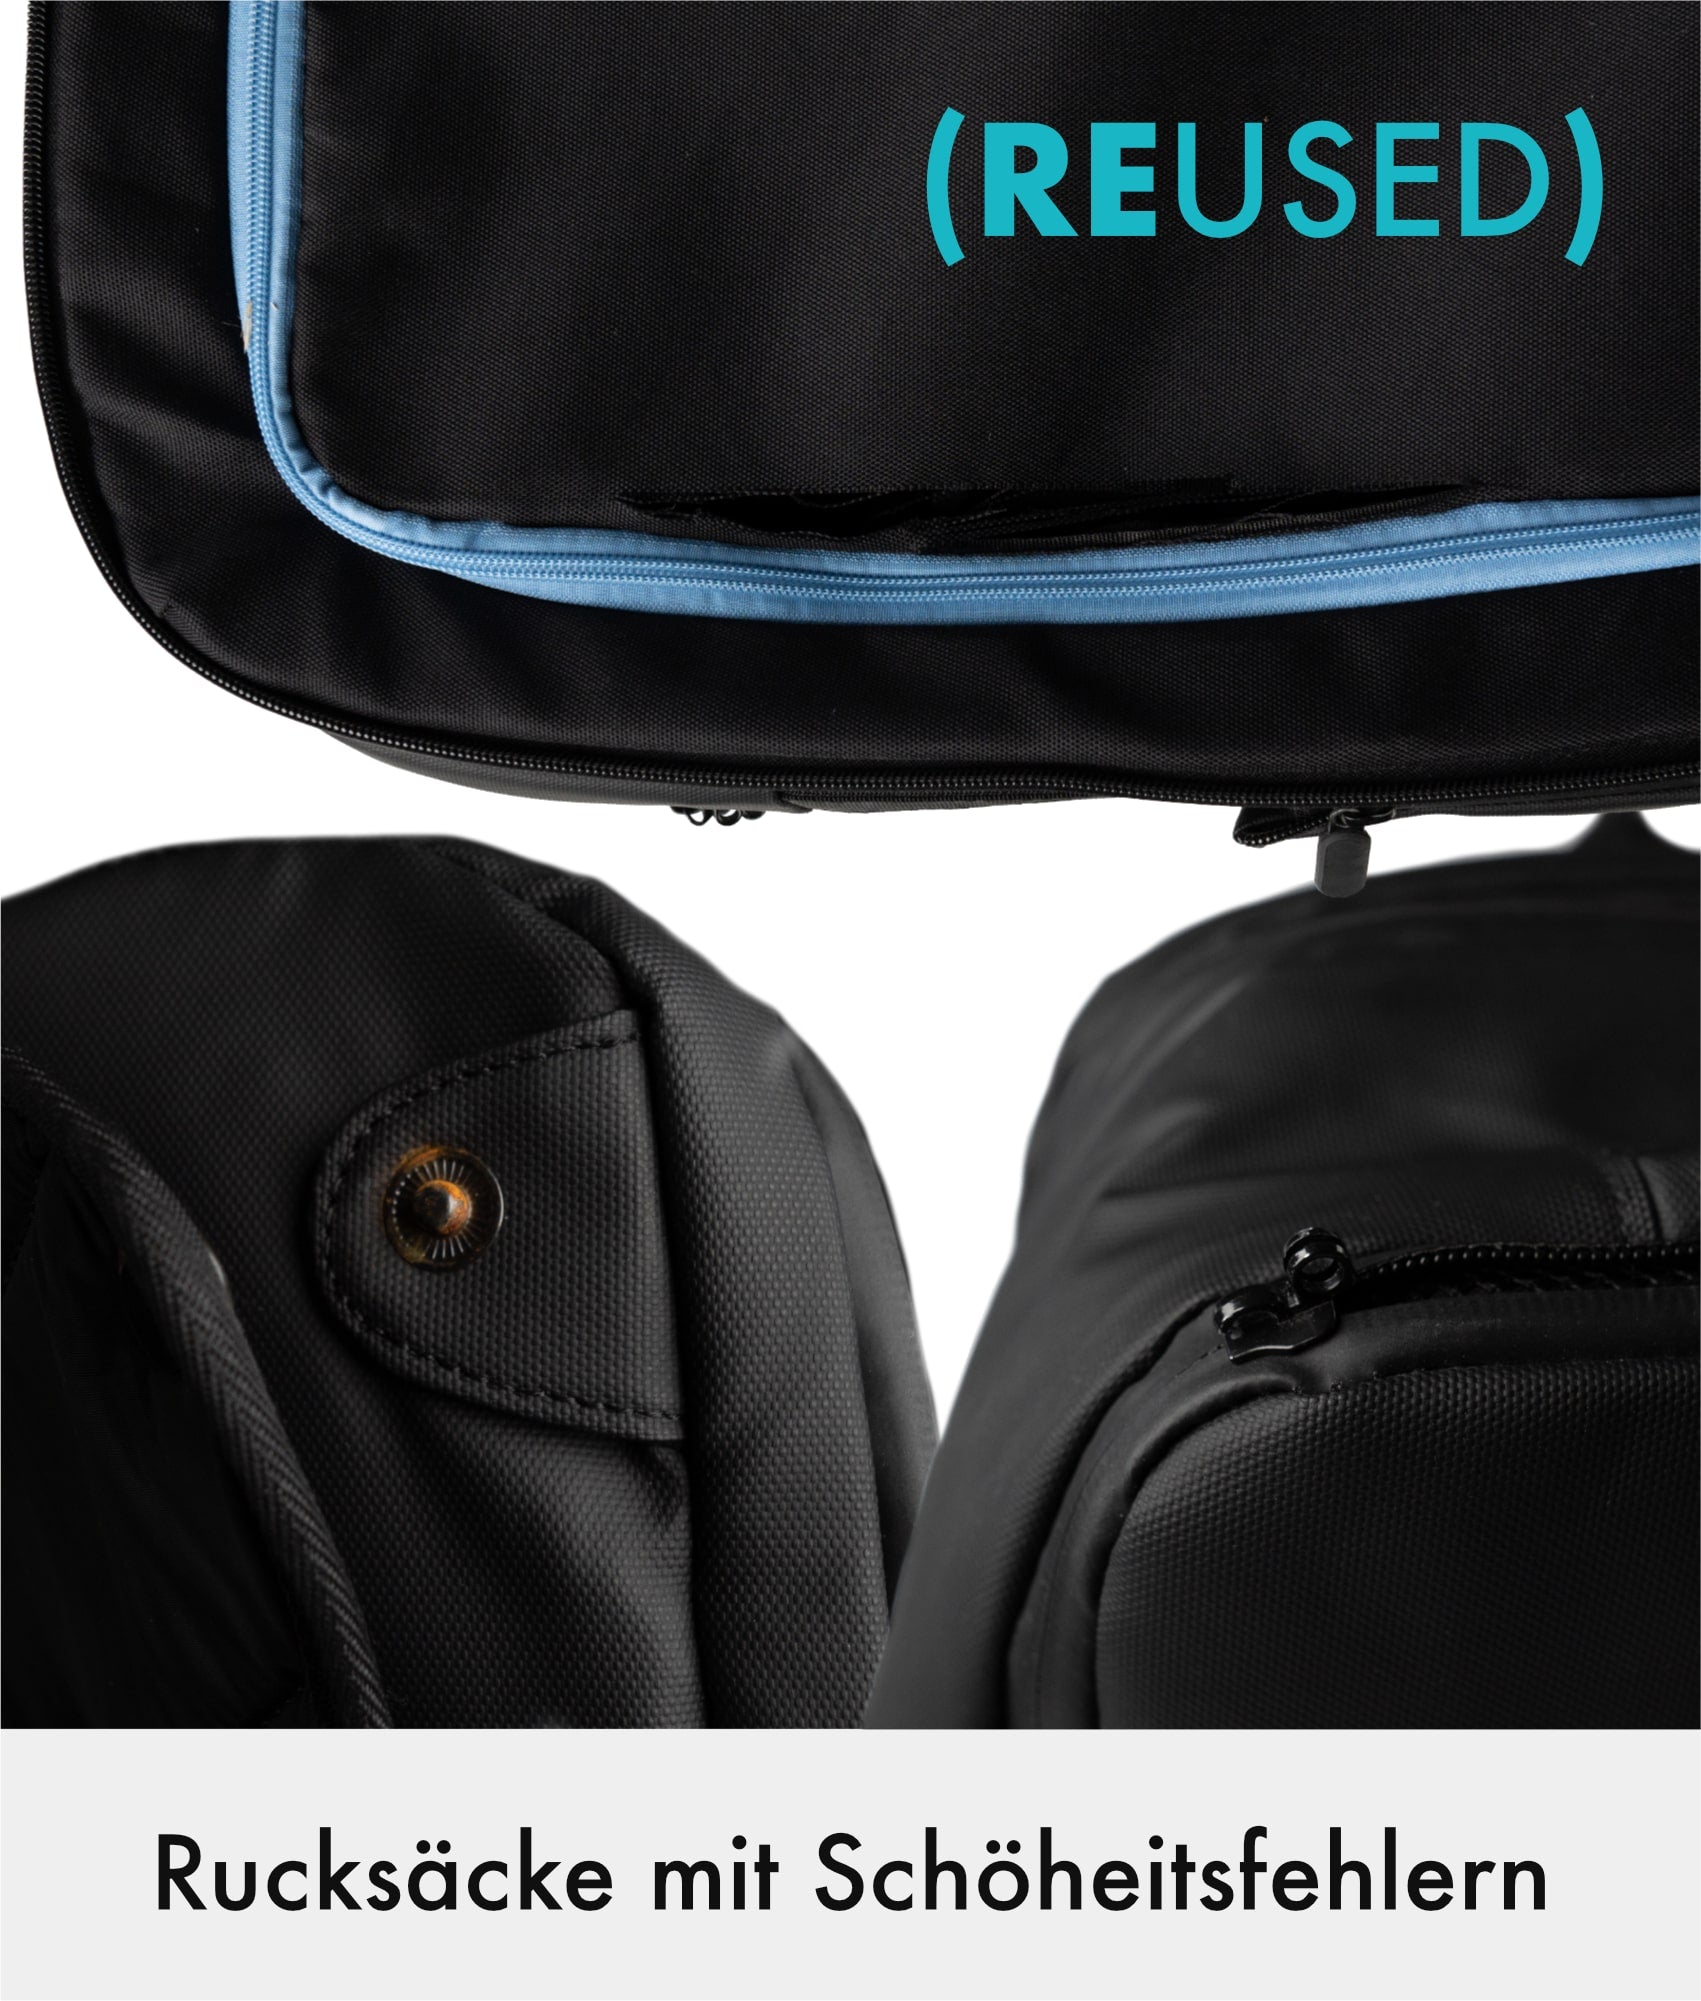 Backpack onemate | kaufen (REUSED) Pro Rucksack (Tagesrucksack)